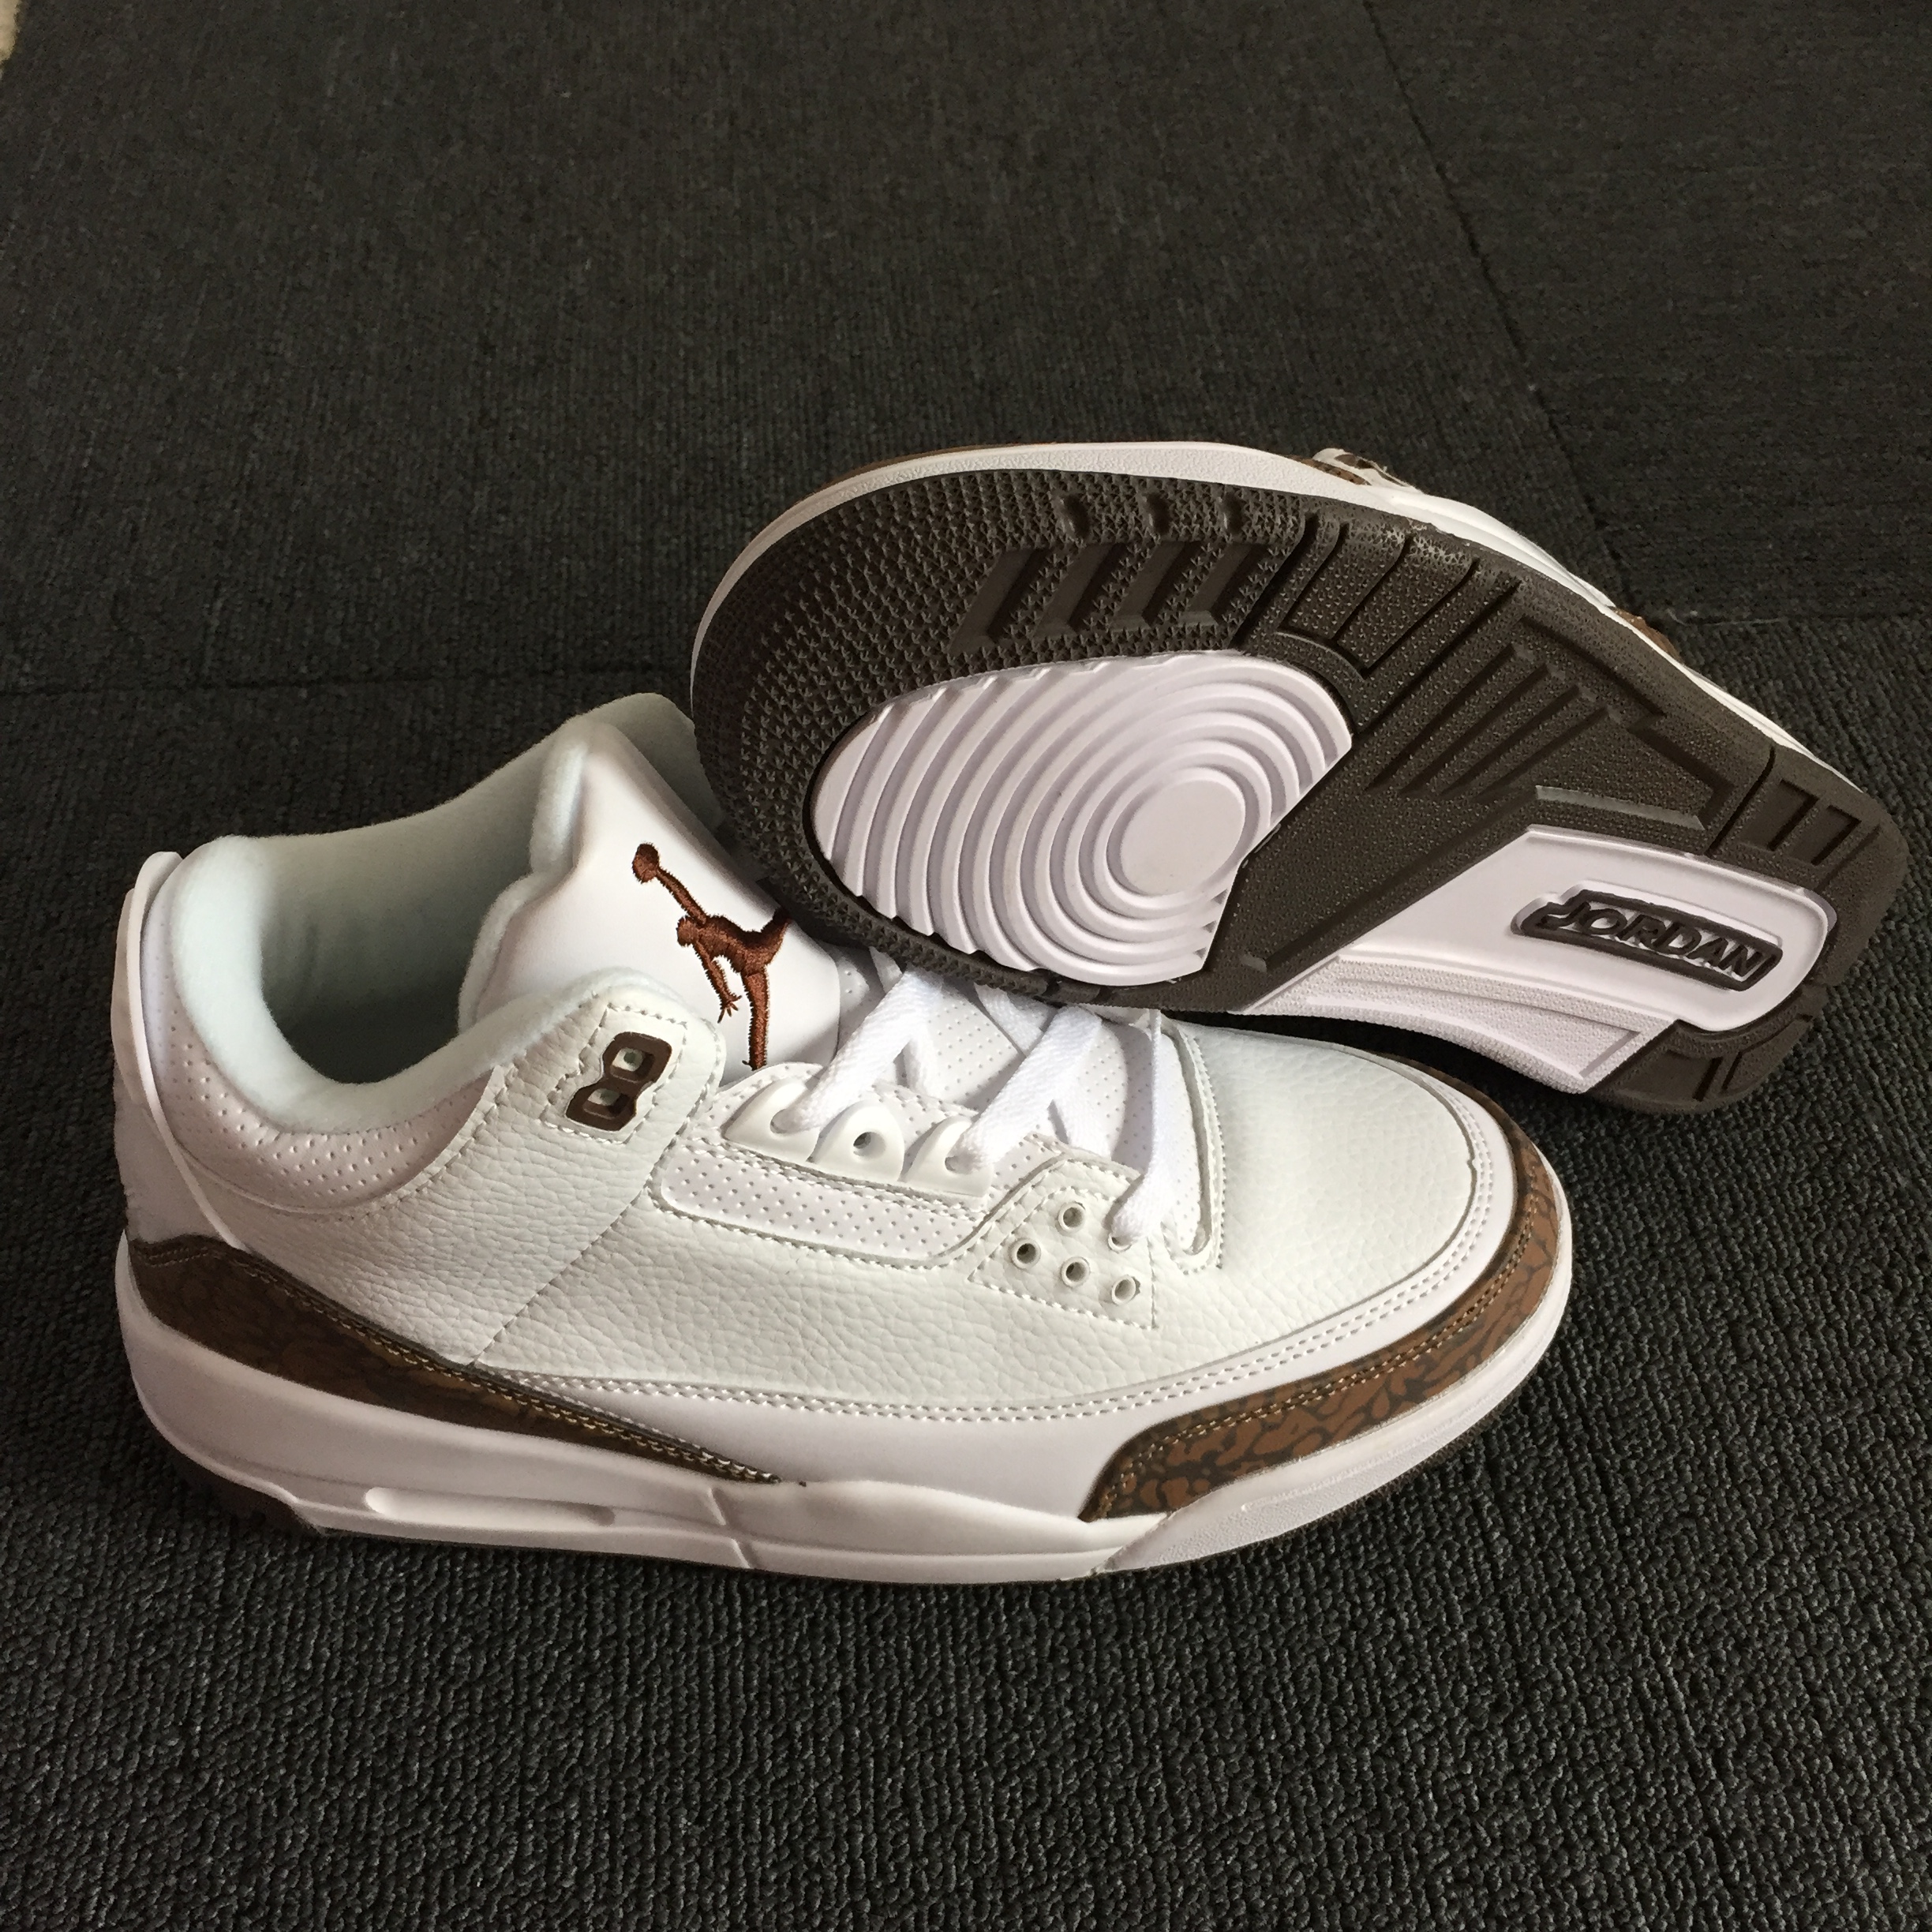 New Air Jordan 3 Retro White Brown Shoe